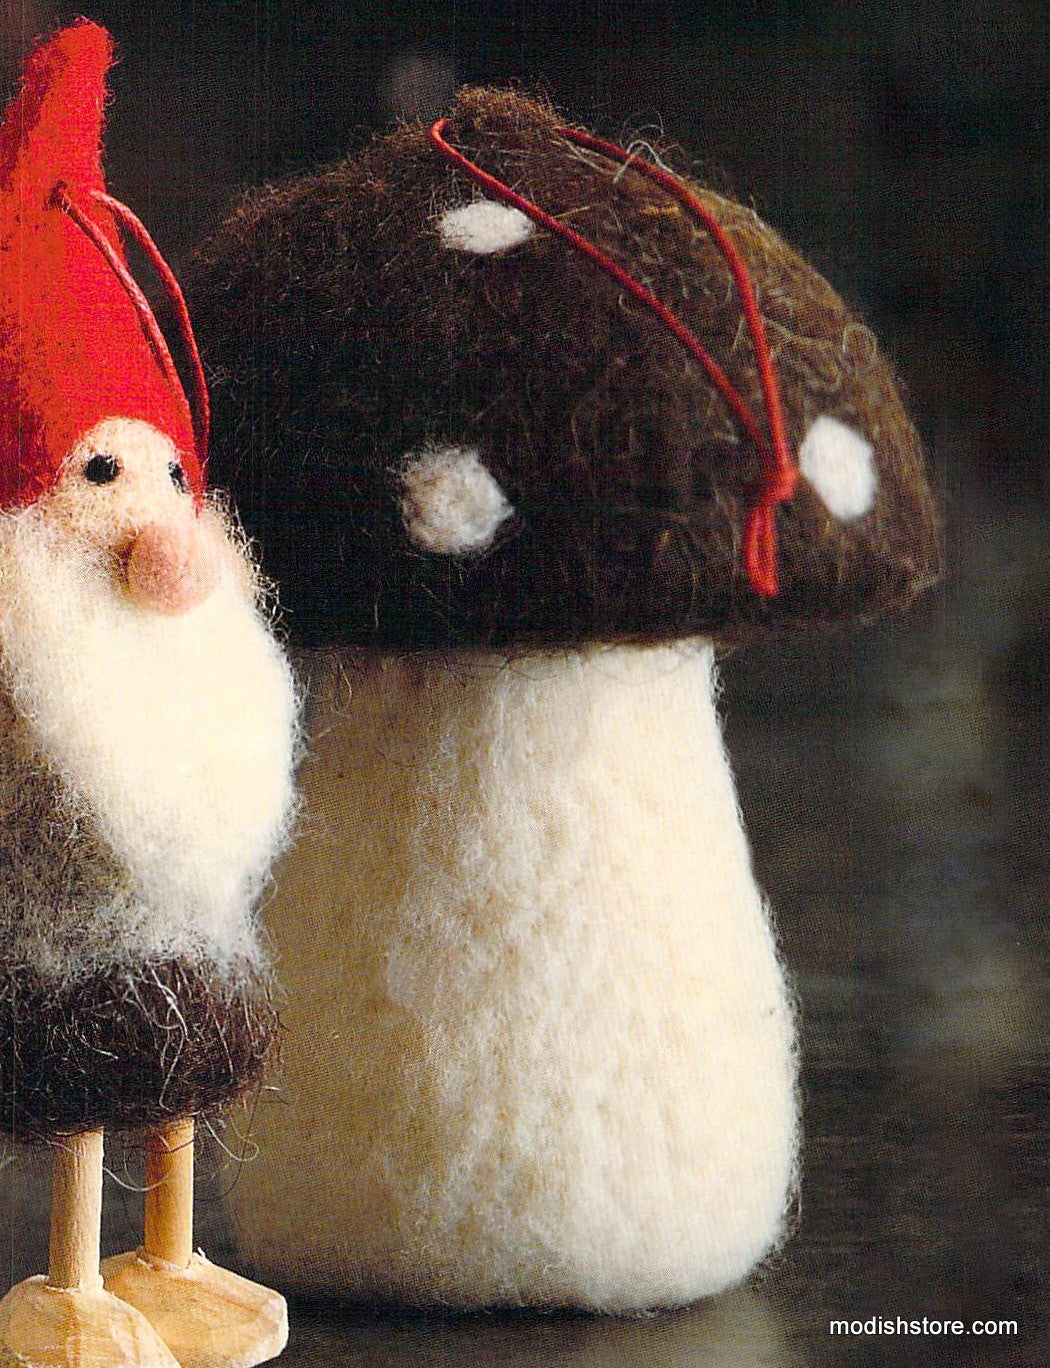 Roost Magical Mushroom Ornaments - Set Of 5